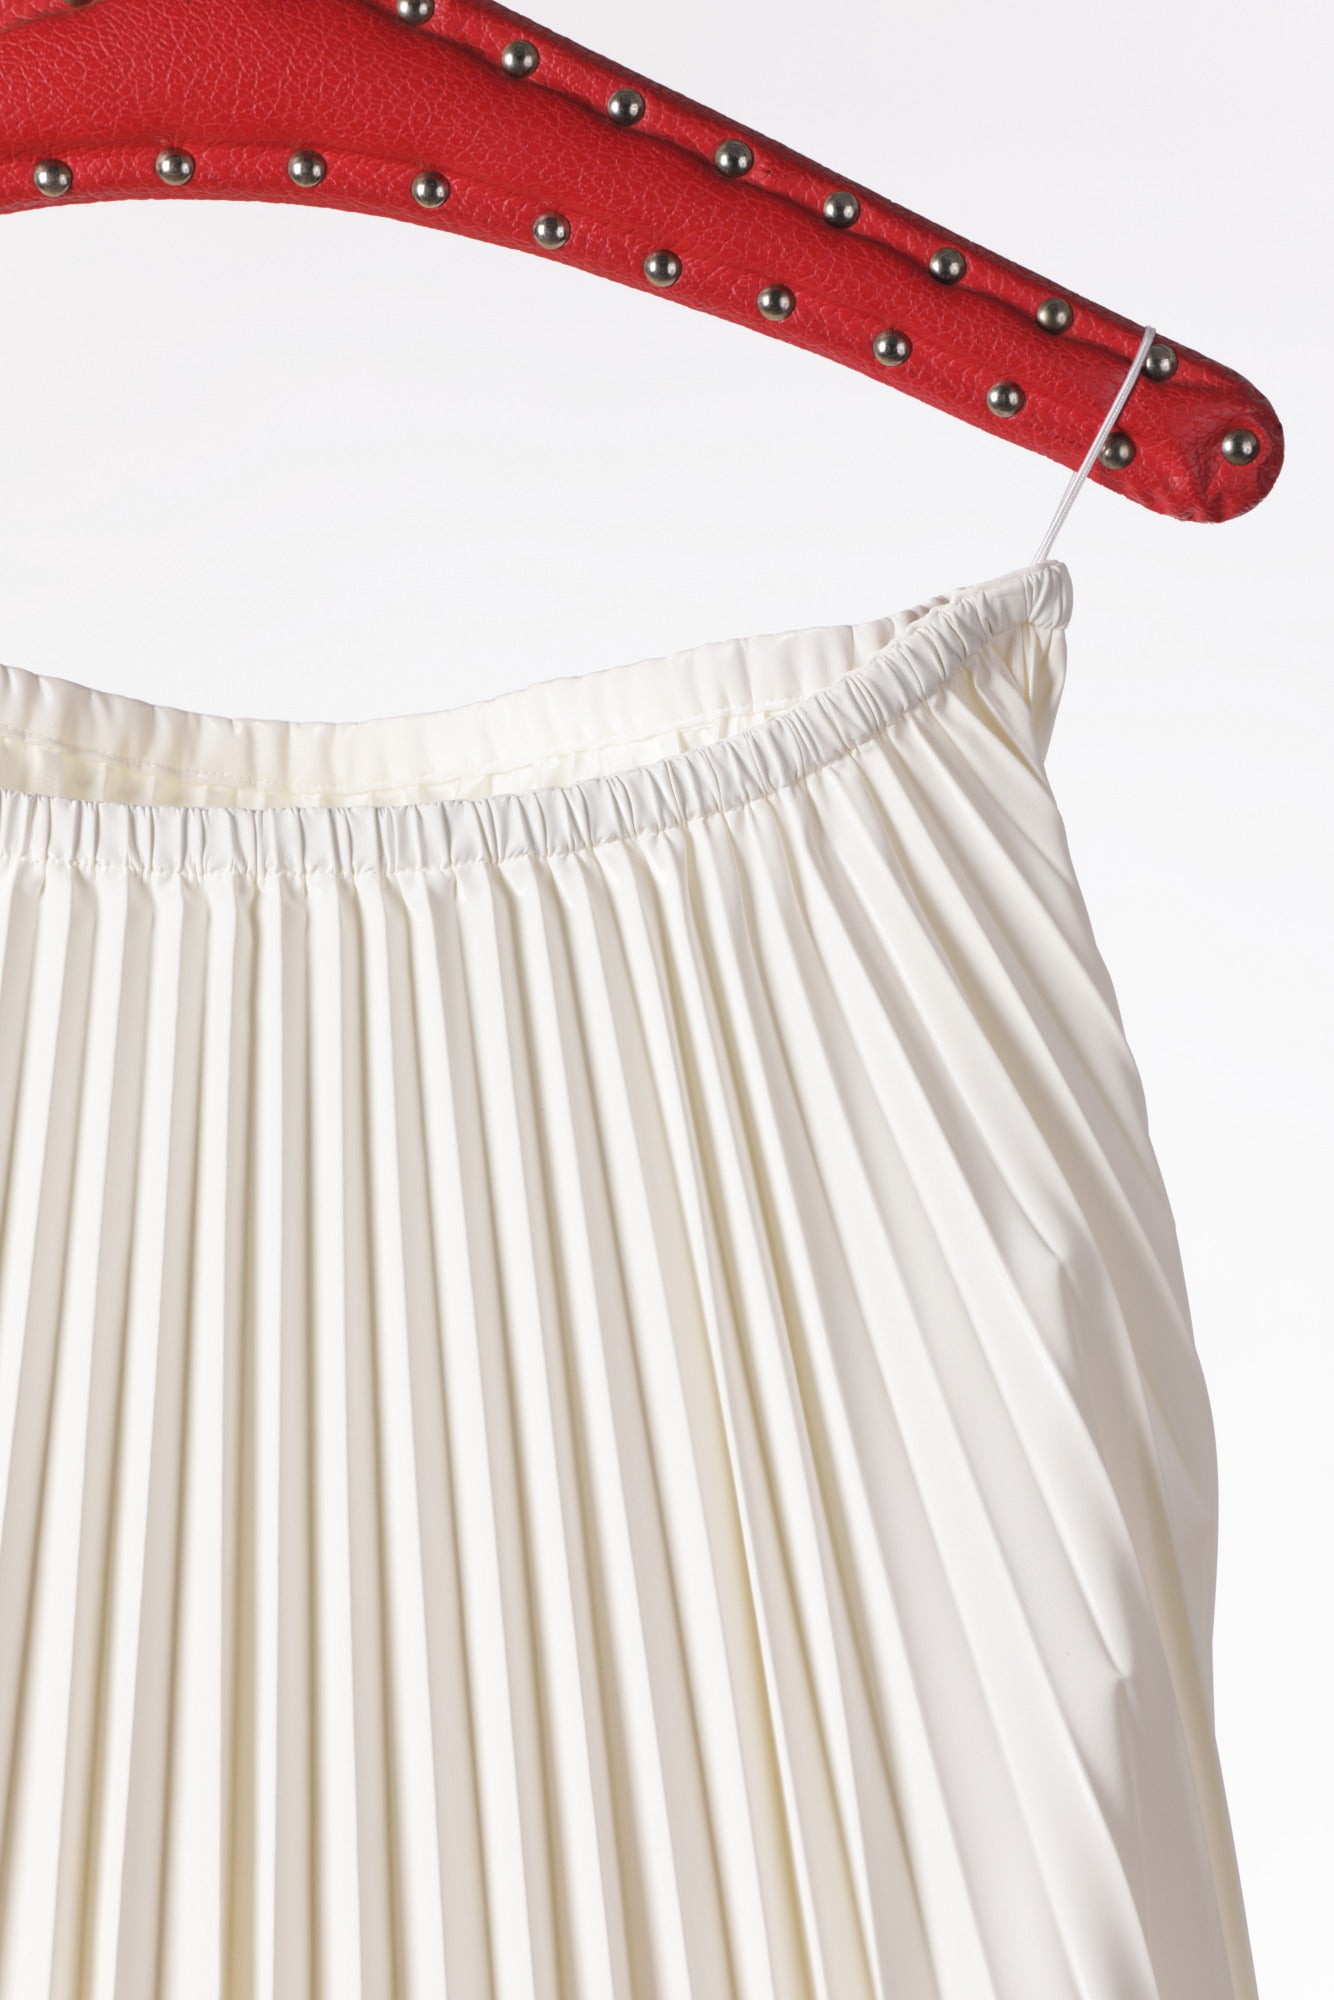 Fendi white pleated lounguette skirt